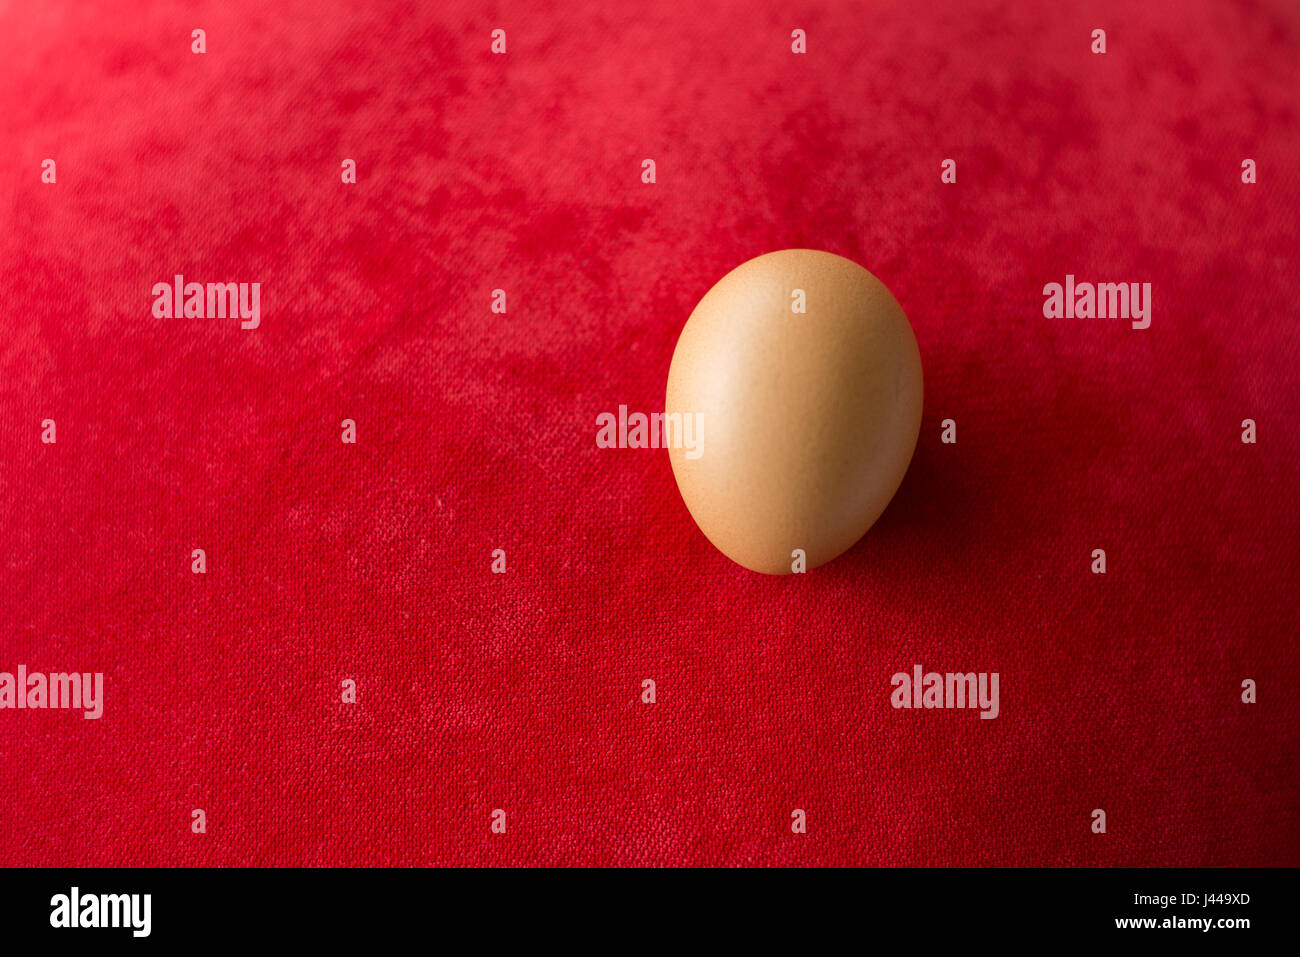 Egg on red carpet background Stock Photo